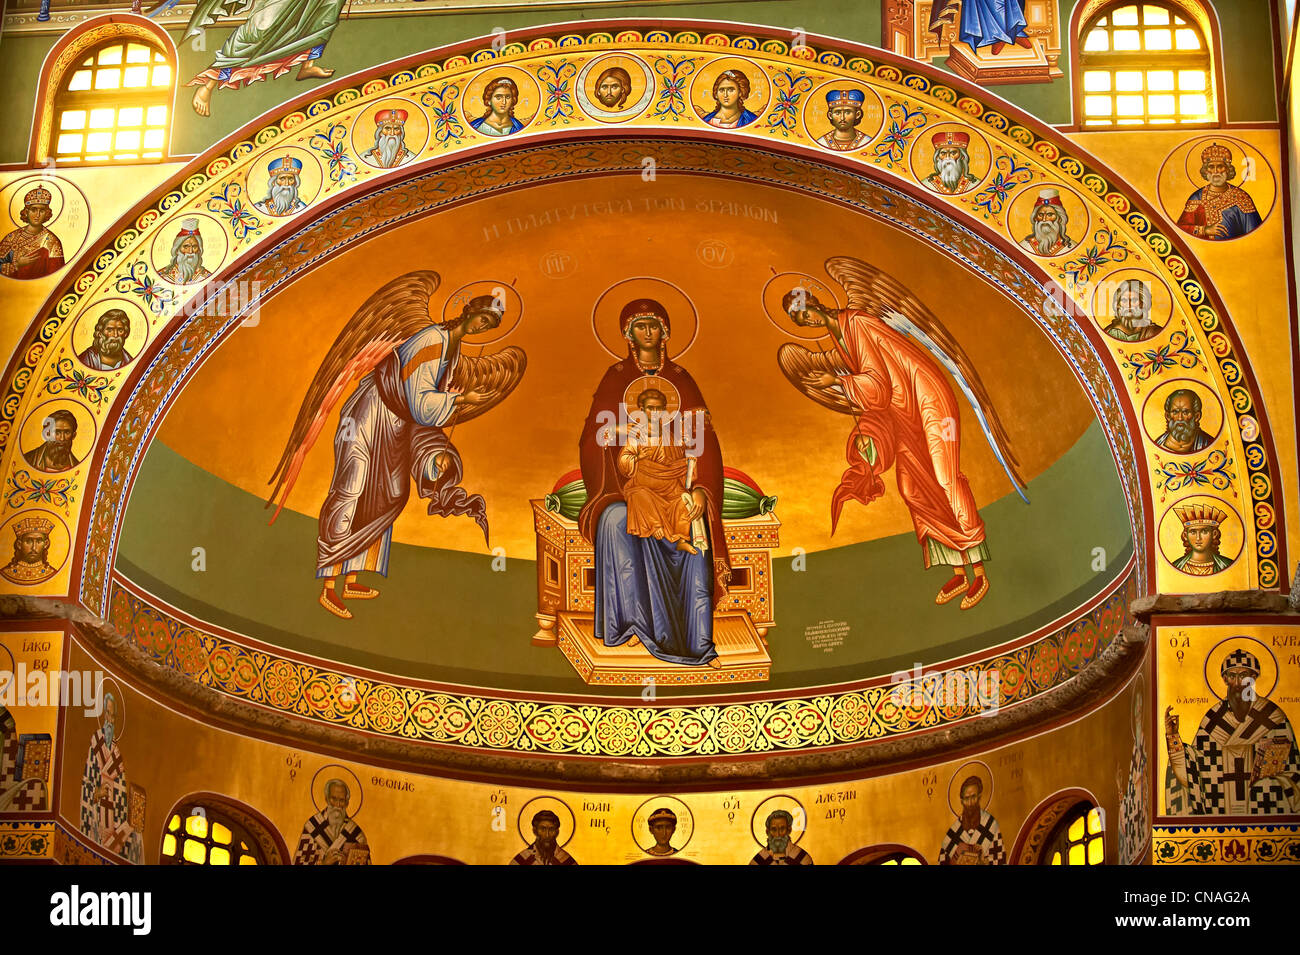 Reconstucted Byzantine style frescos of the 4th century AD 3 aisled Roamnesque basilica of Saint Demetrius, Thessaloniki Greece Stock Photo